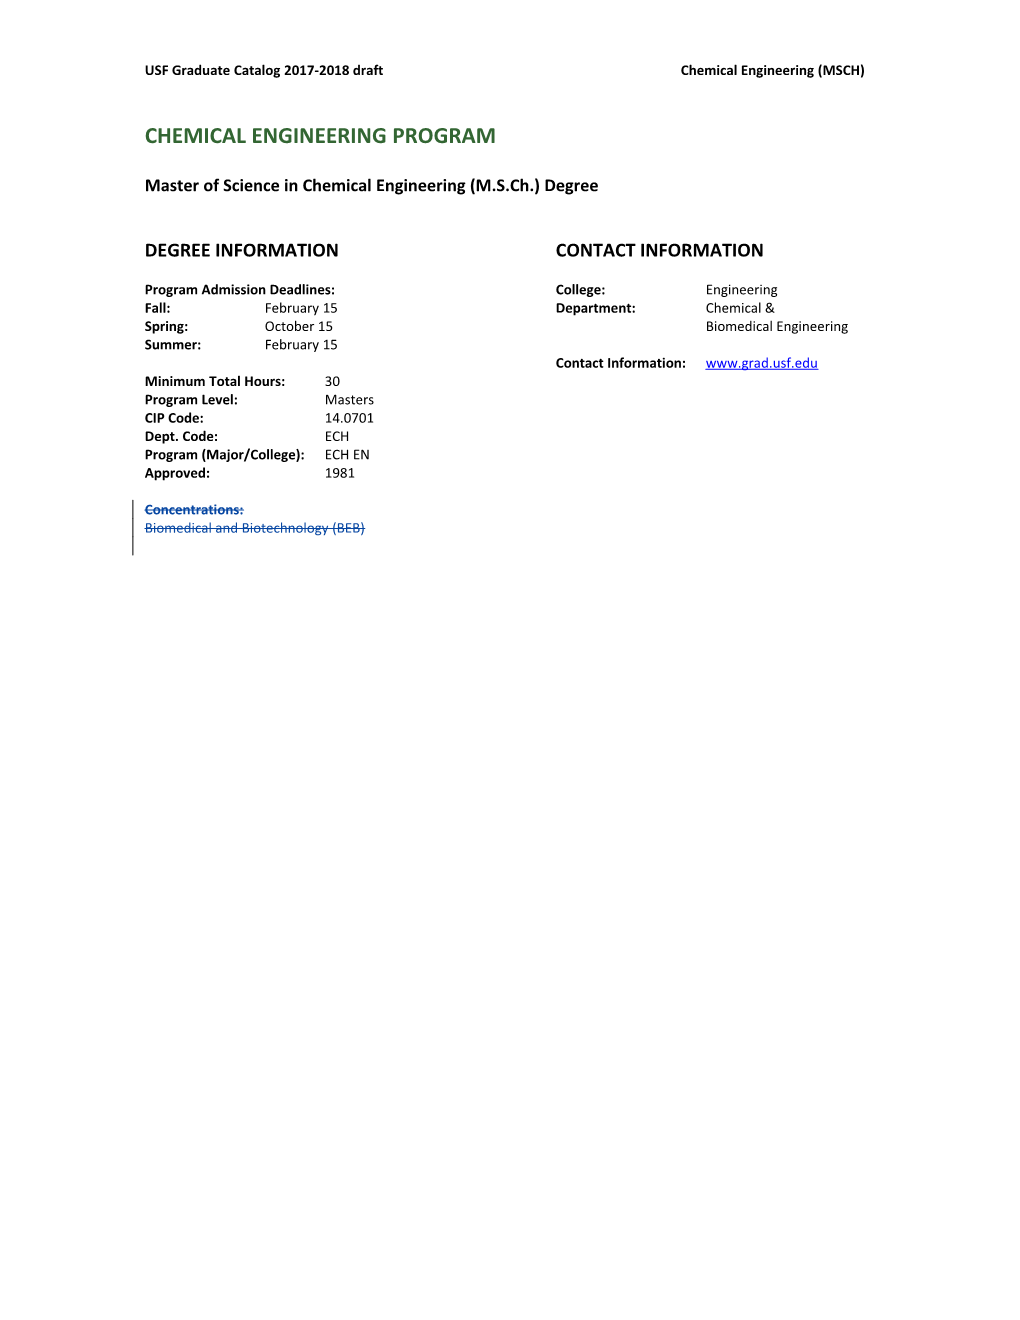 USF Graduate Catalog 2017-2018 Draftchemical Engineering (MSCH)